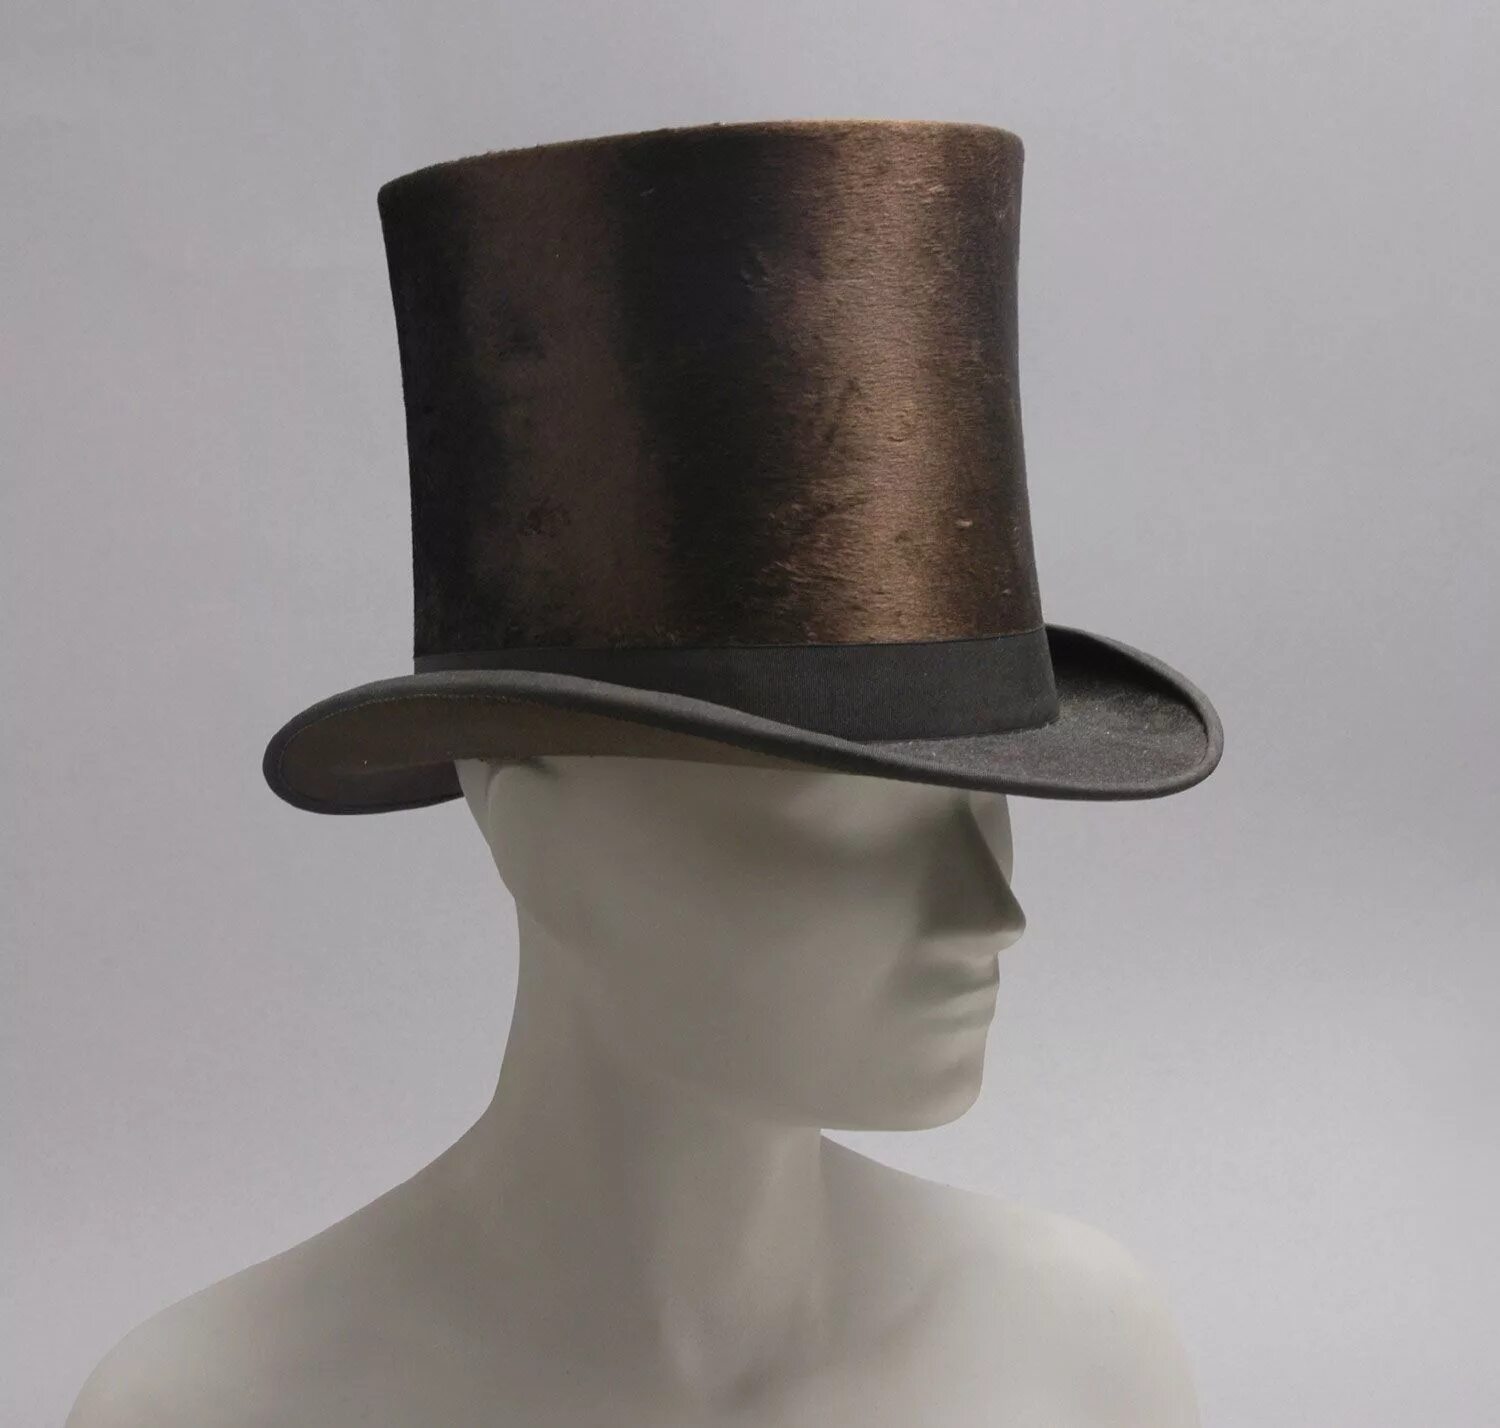 Цилиндр одежда. Боливар шляпа 19 век. Боливар это широкополая шляпа. Шляпа Боннет 19 век. Шляпы Циммерман 19 века.